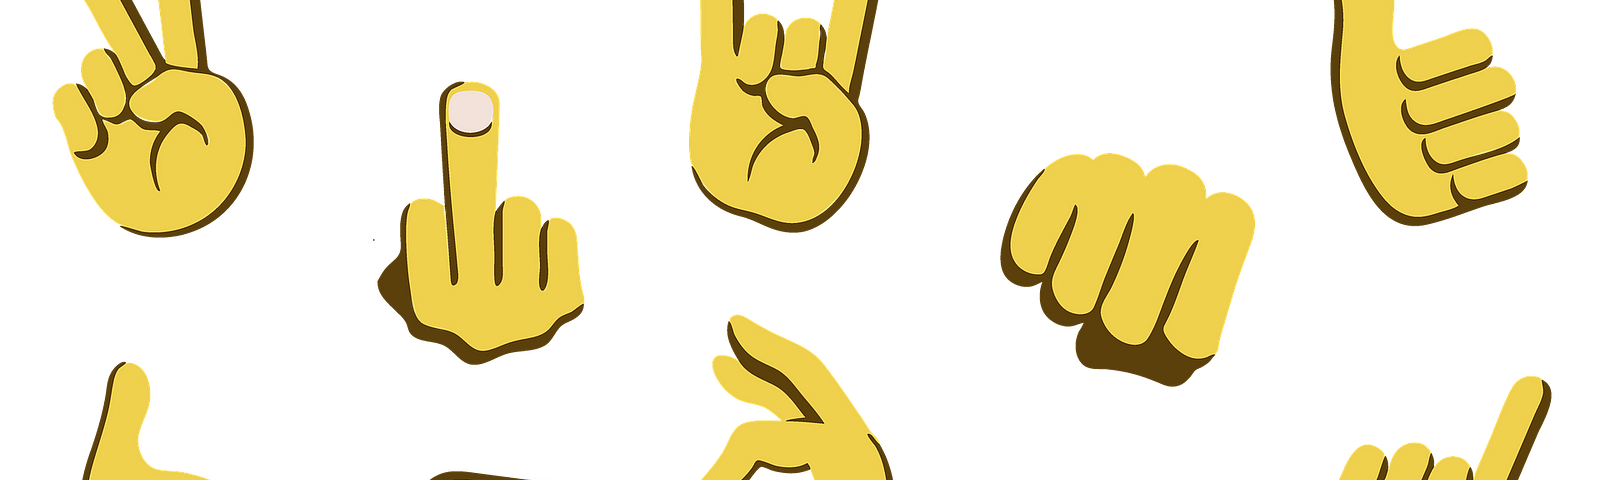 Many varying hand emoji gestures